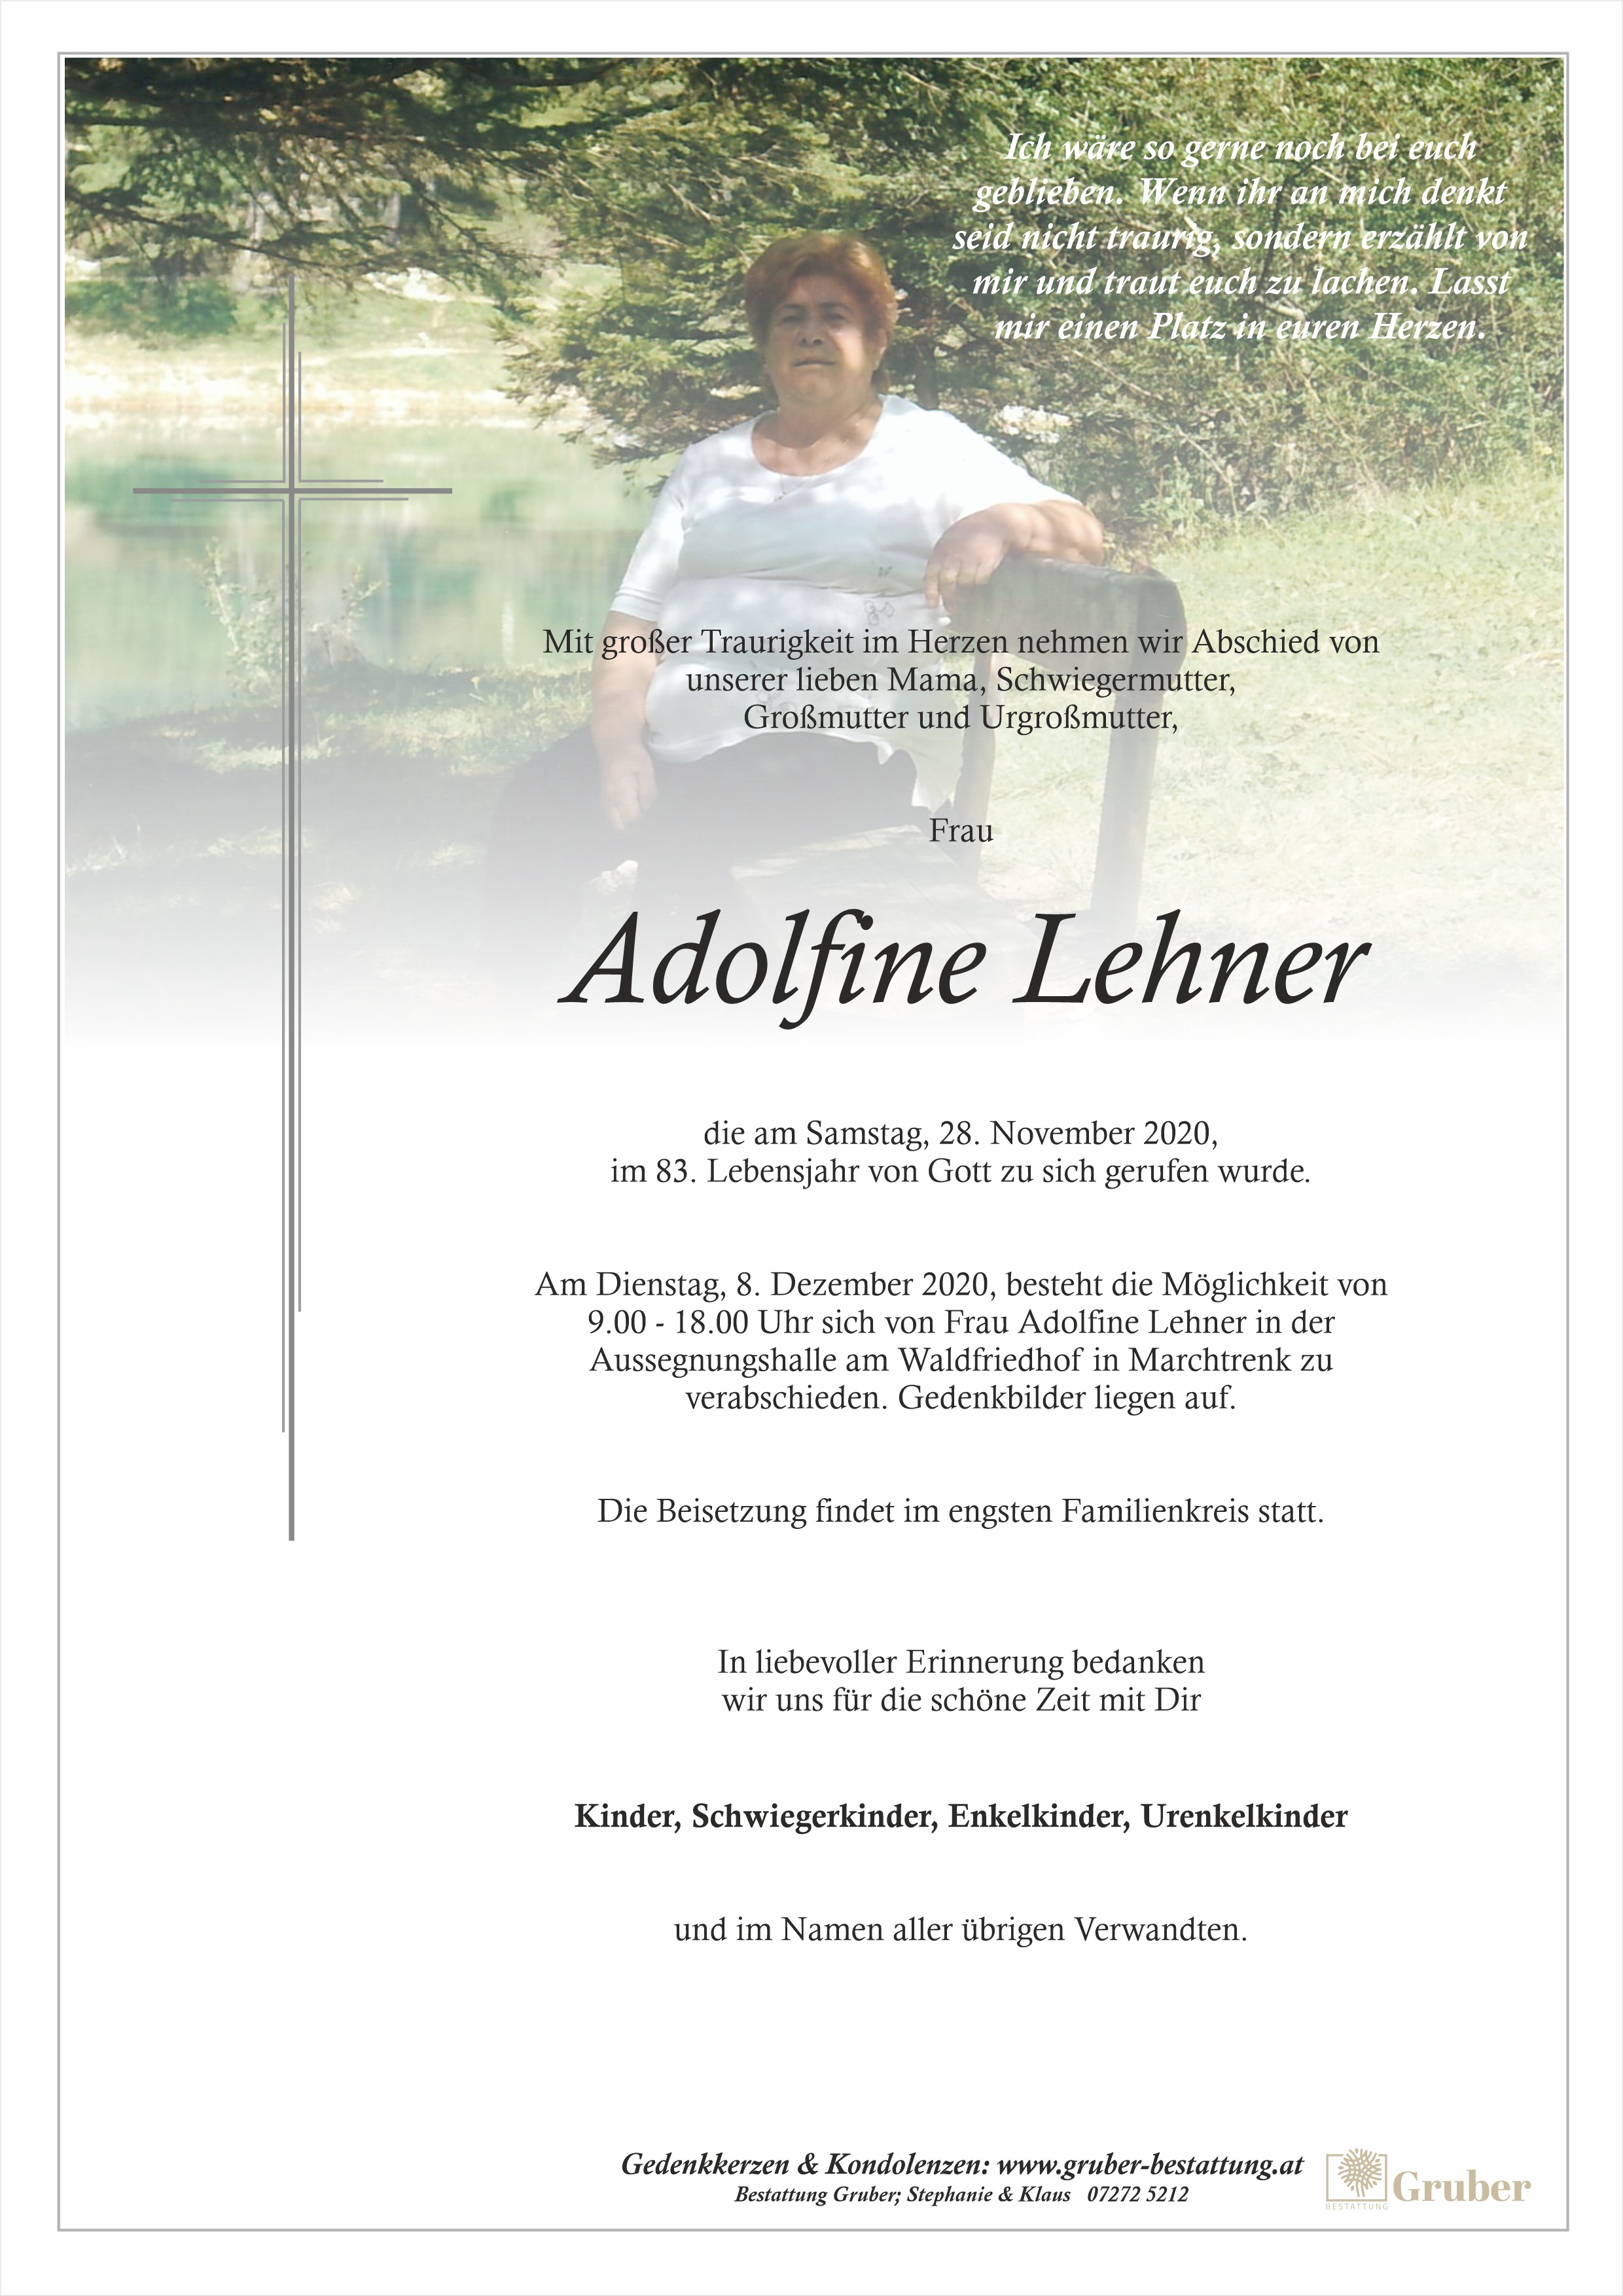 Adolfine Lehner (Marchtrenk)